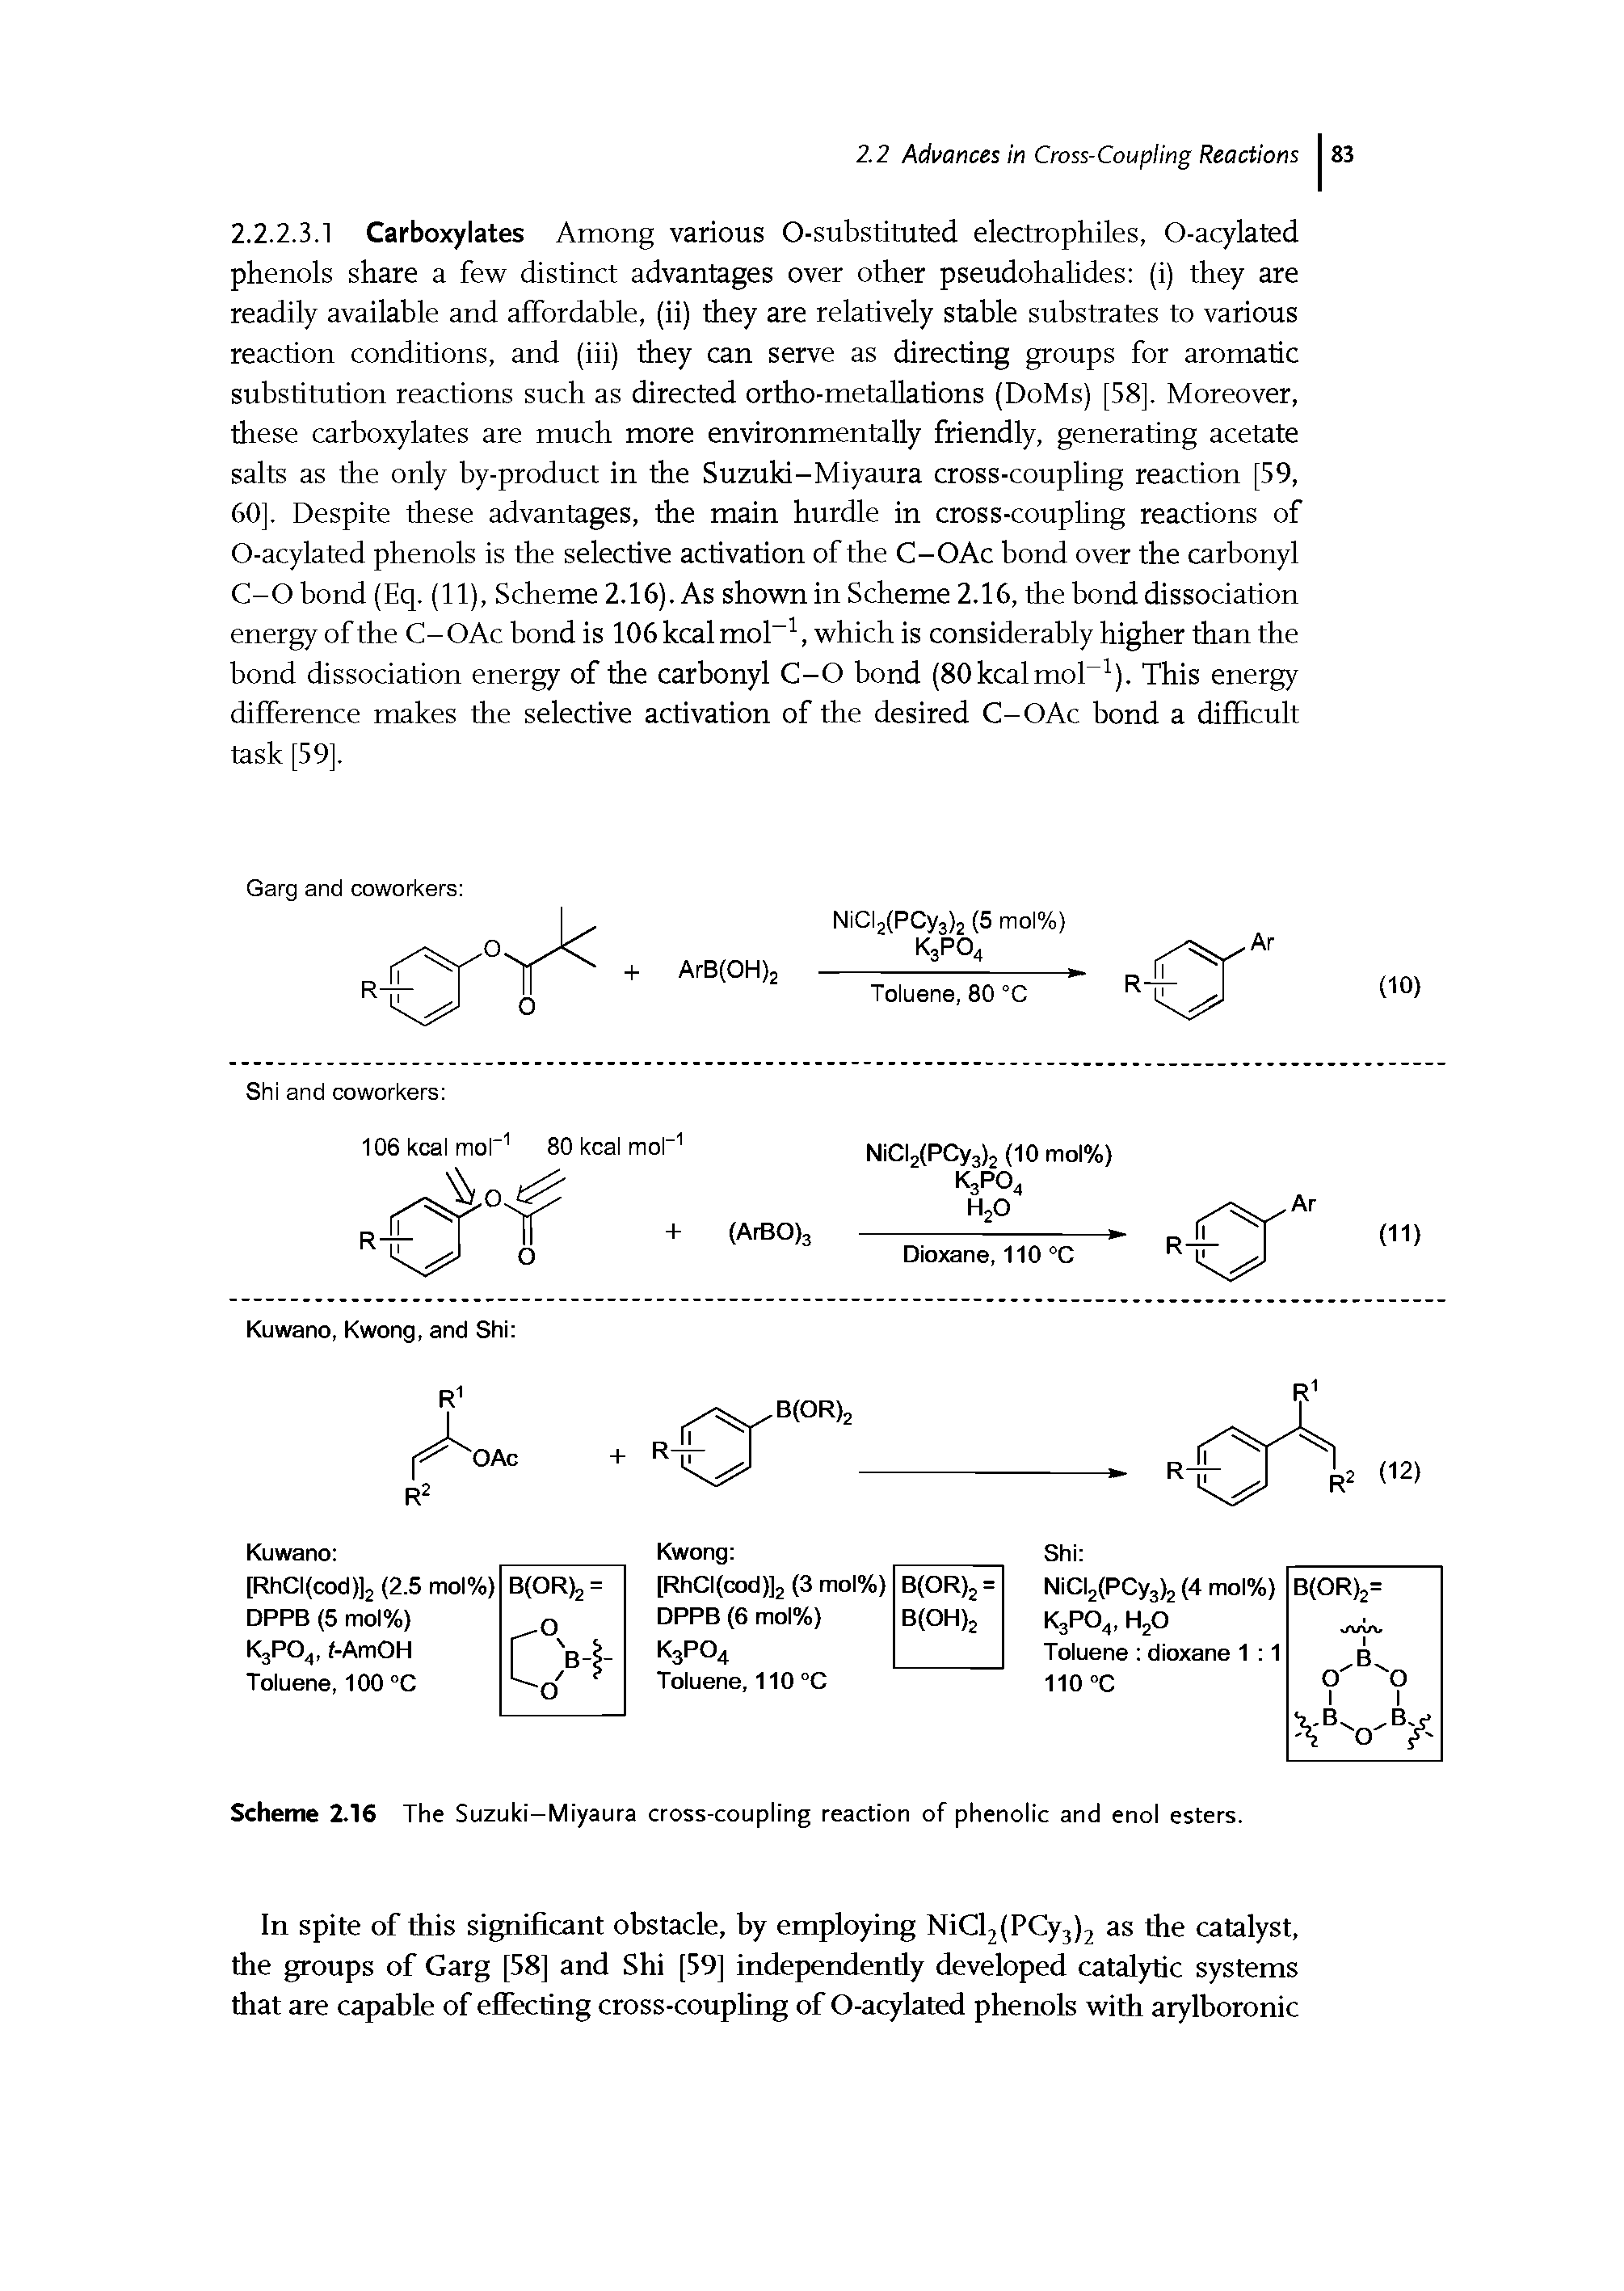 Scheme 2.16 The Suzuki-Miyaura cross-coupling reaction of phenolic and enol esters.